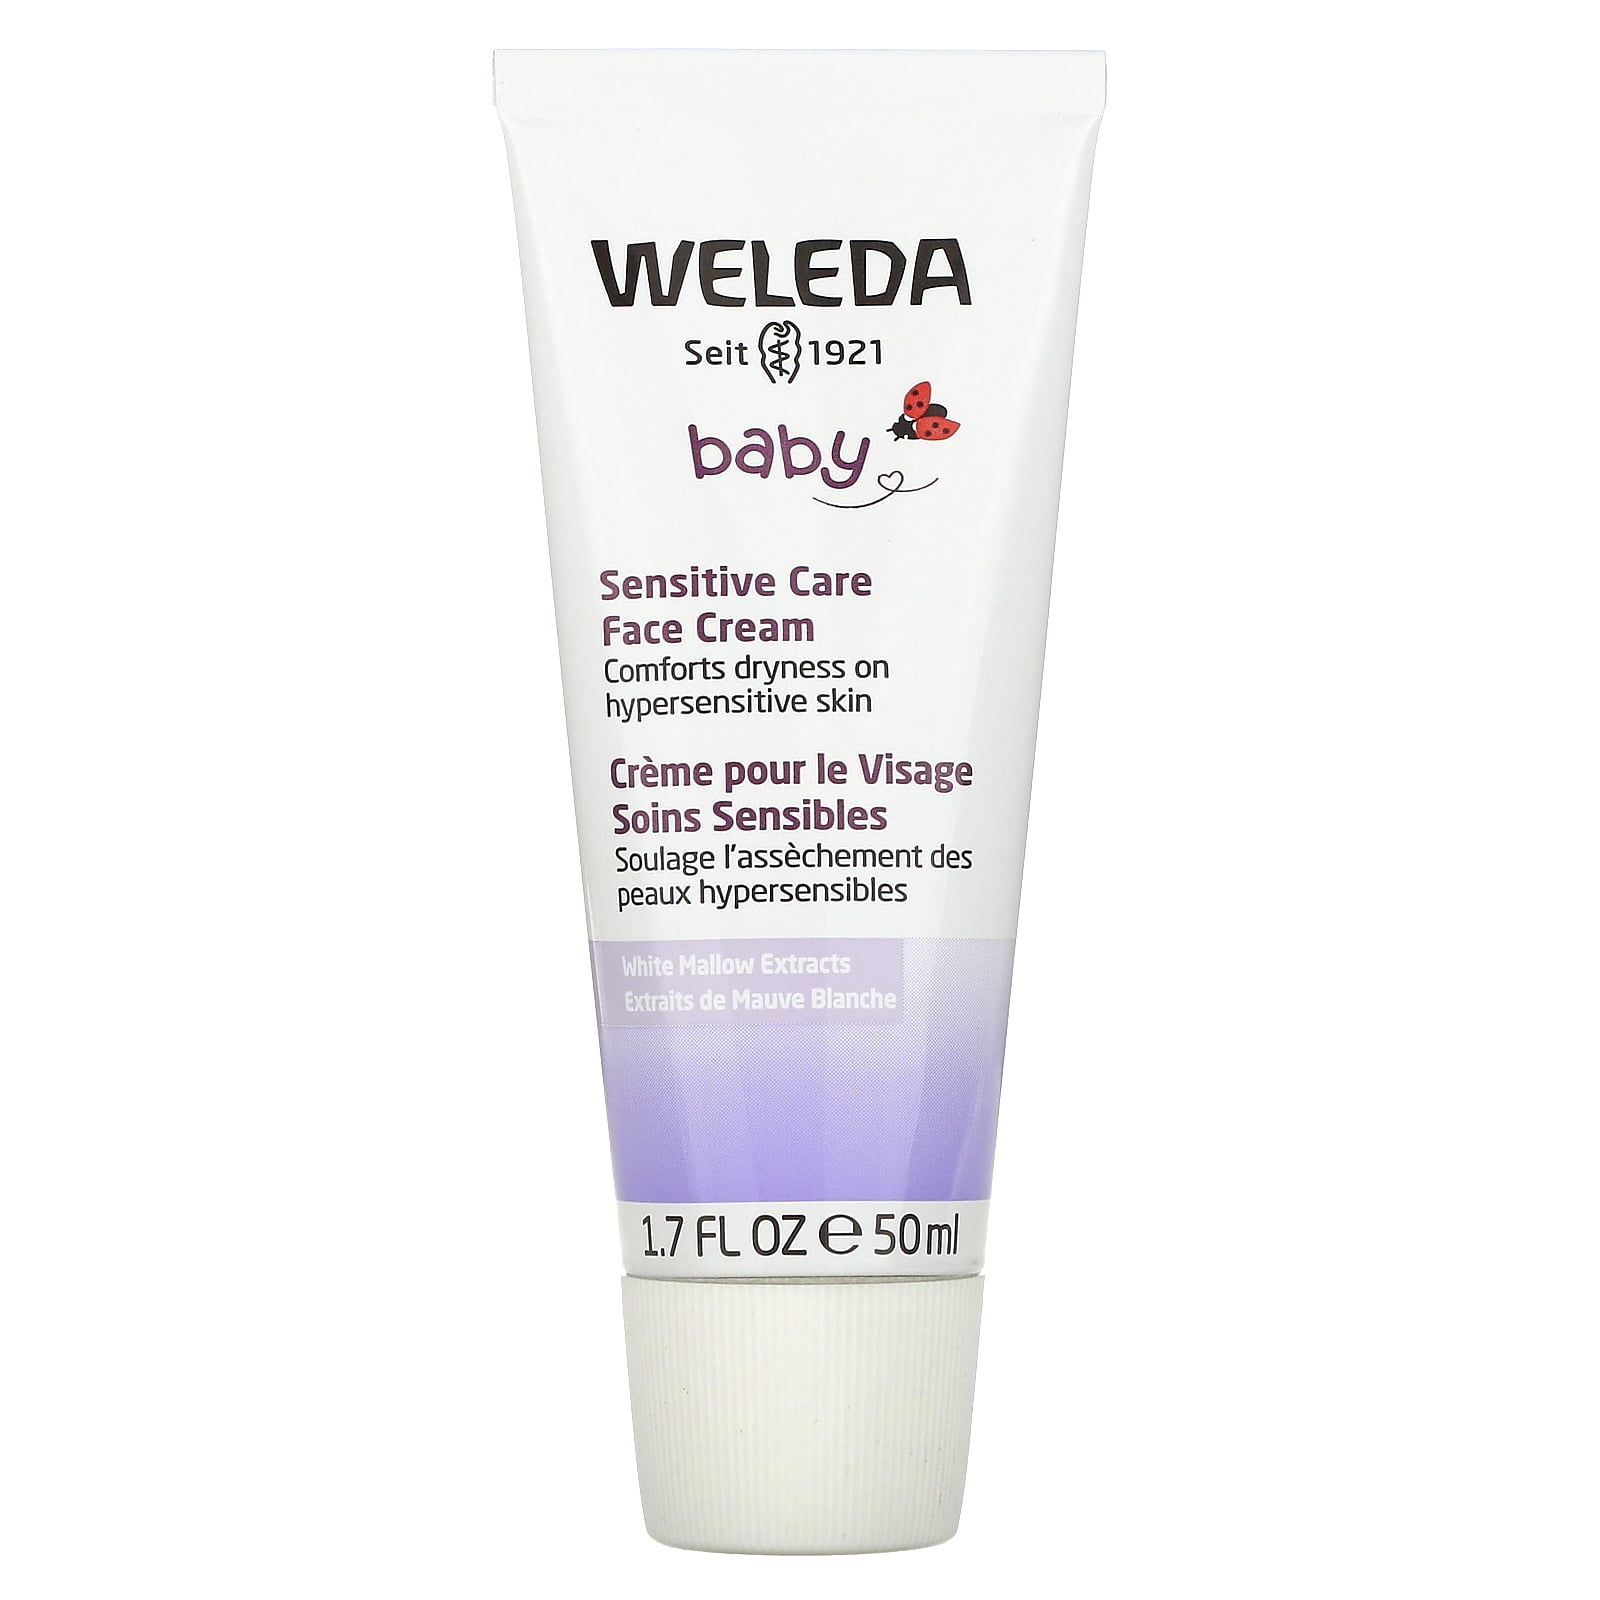 Weleda Face Cream, White Mallow Extracts, Sensitive Care, Baby - 1.7 fl oz